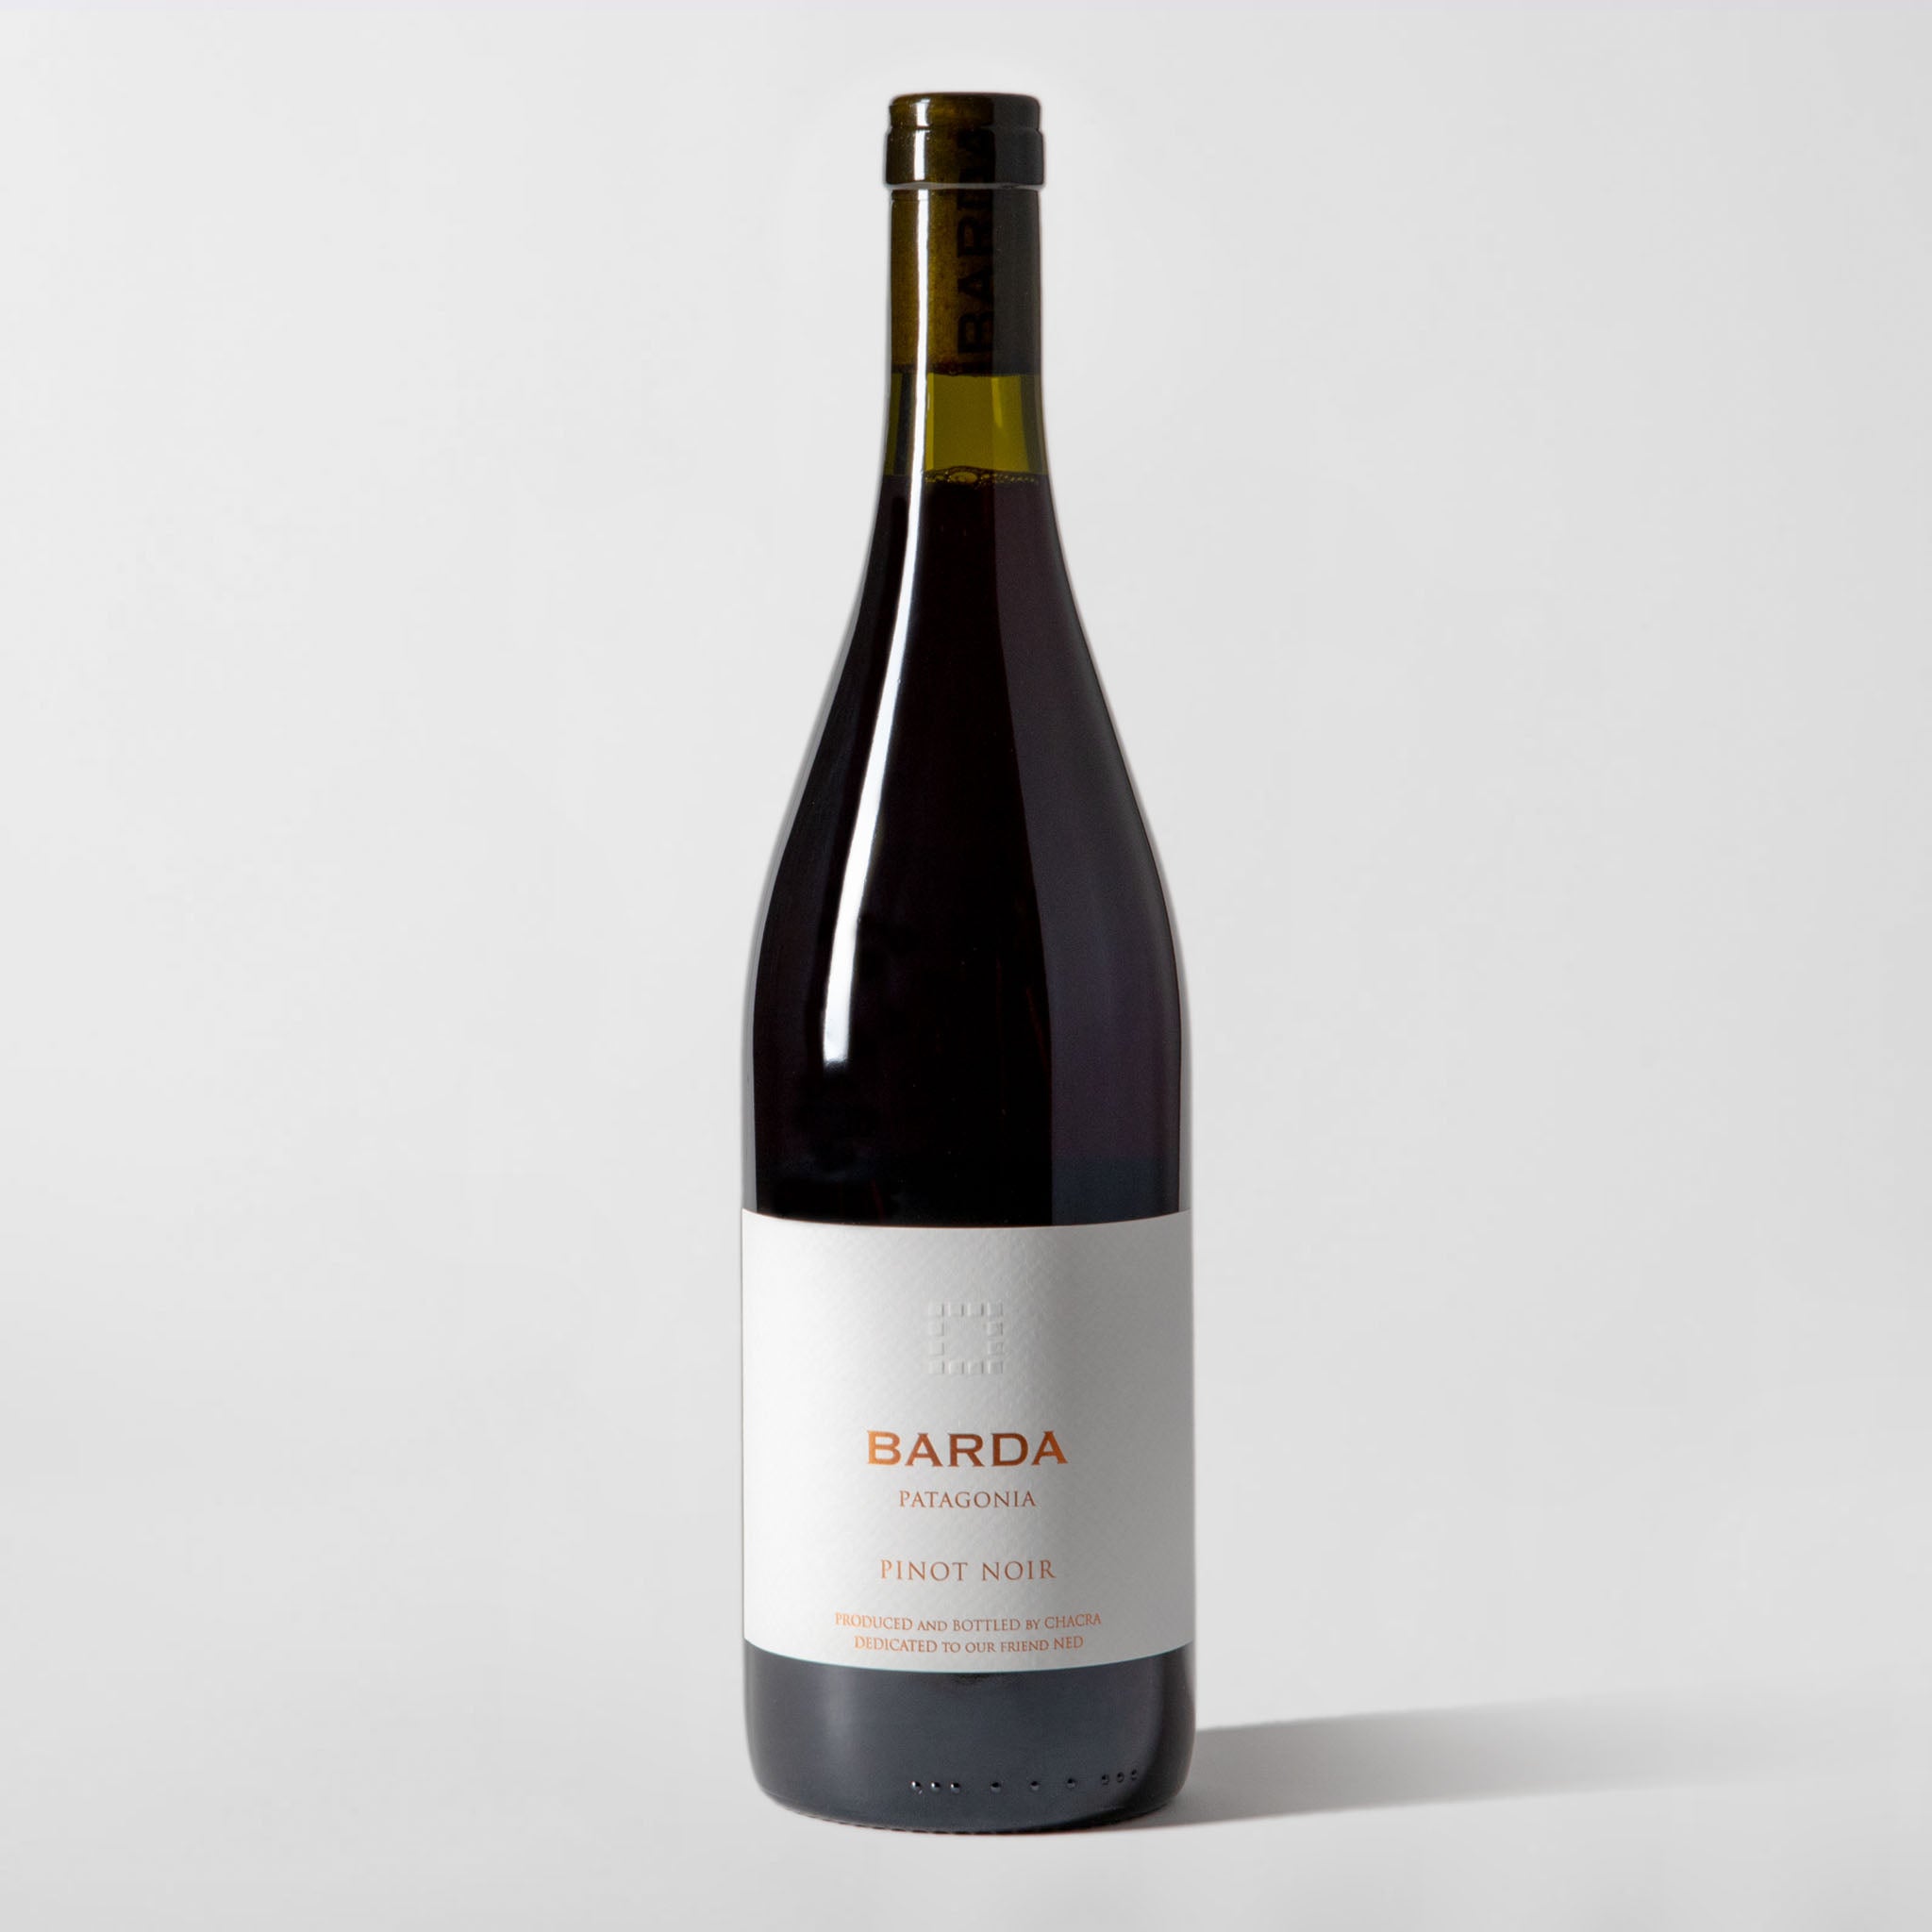 Chacra, 'Barda' Pinot Noir Patagonia Argentina